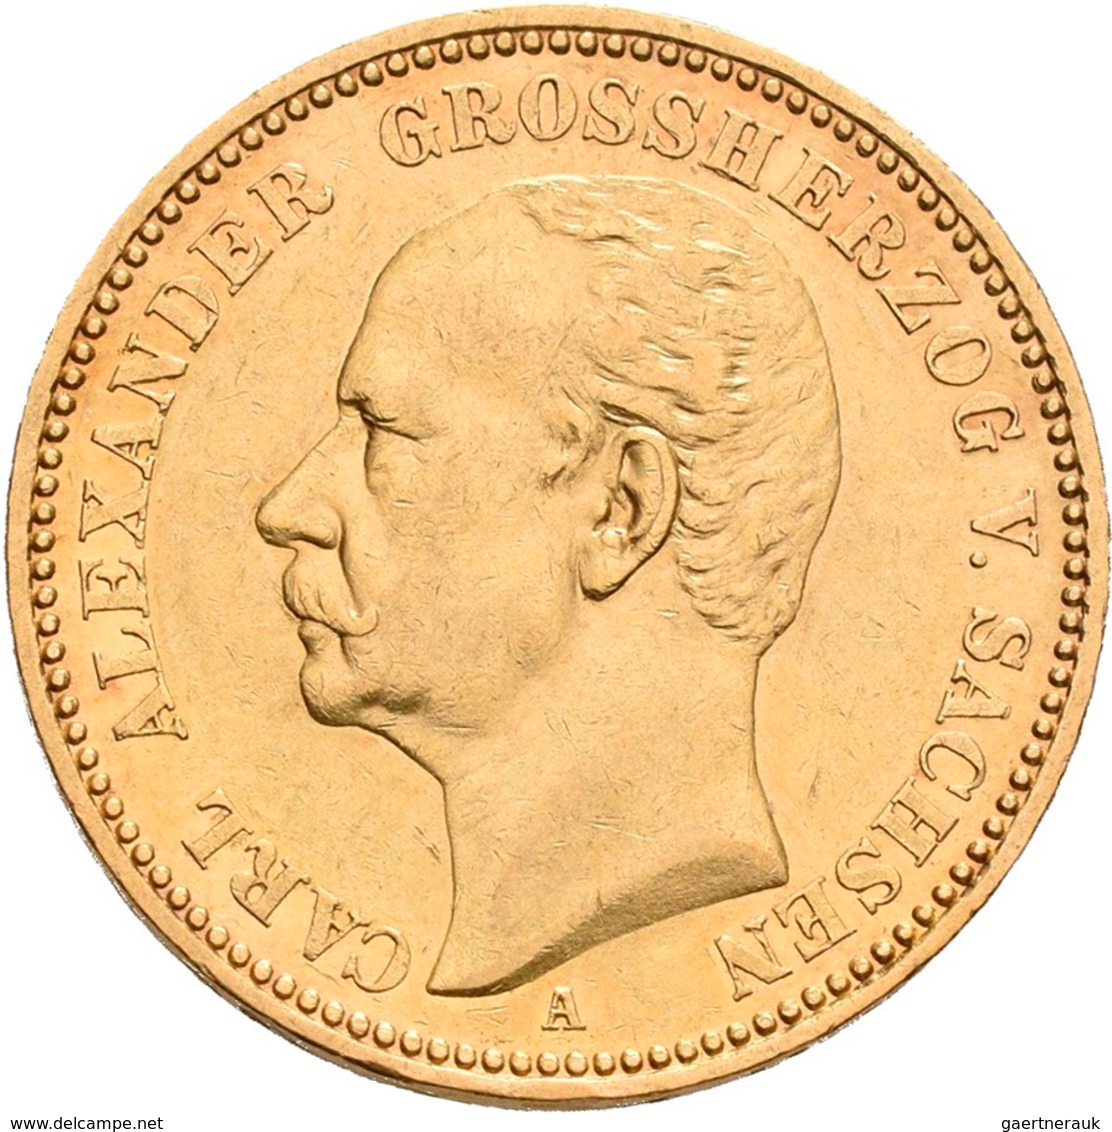 Sachsen-Weimar-Eisenach: Carl Alexander 1853-1901: 20 Mark 1892 A, Jaeger 282. 7,95 G, 900/1000 Gold - Gold Coins